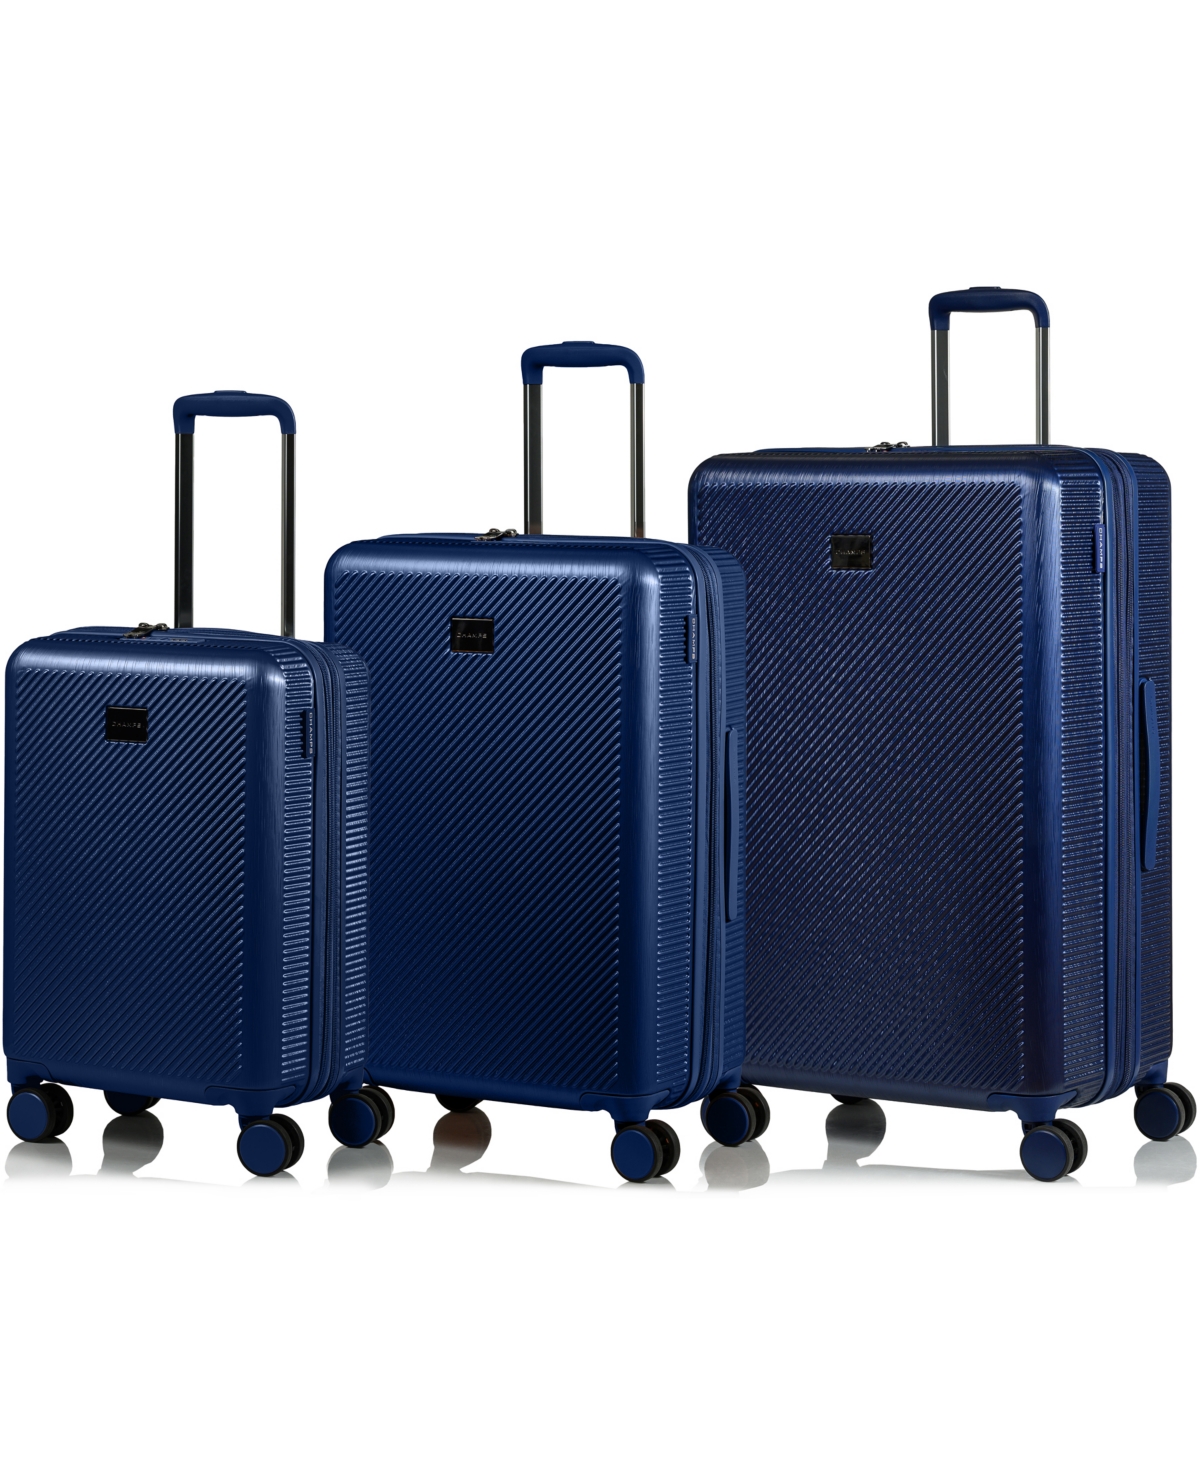 3-Piece Iconic Ii Hardside Luggage Set - Navy